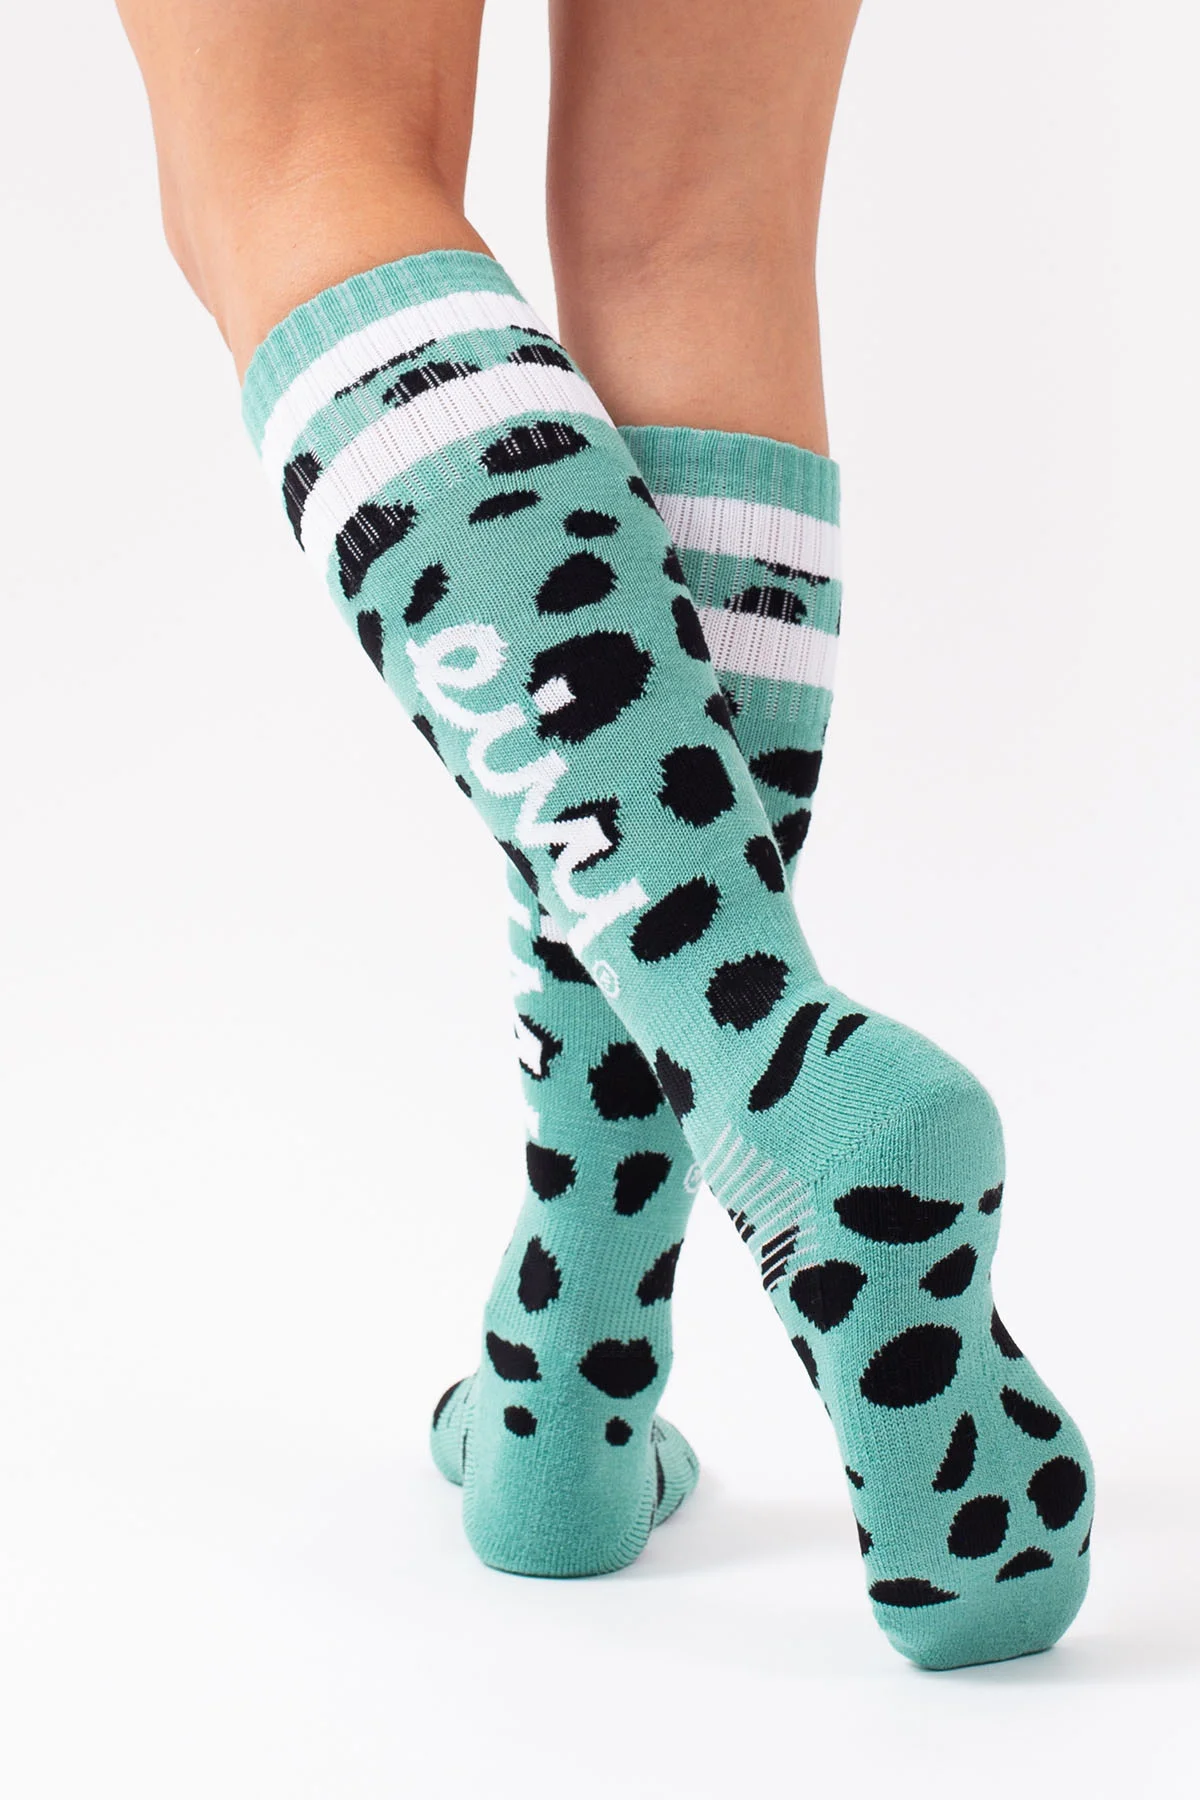 Cheerleader Wool Socks - Turquoise Cheetah